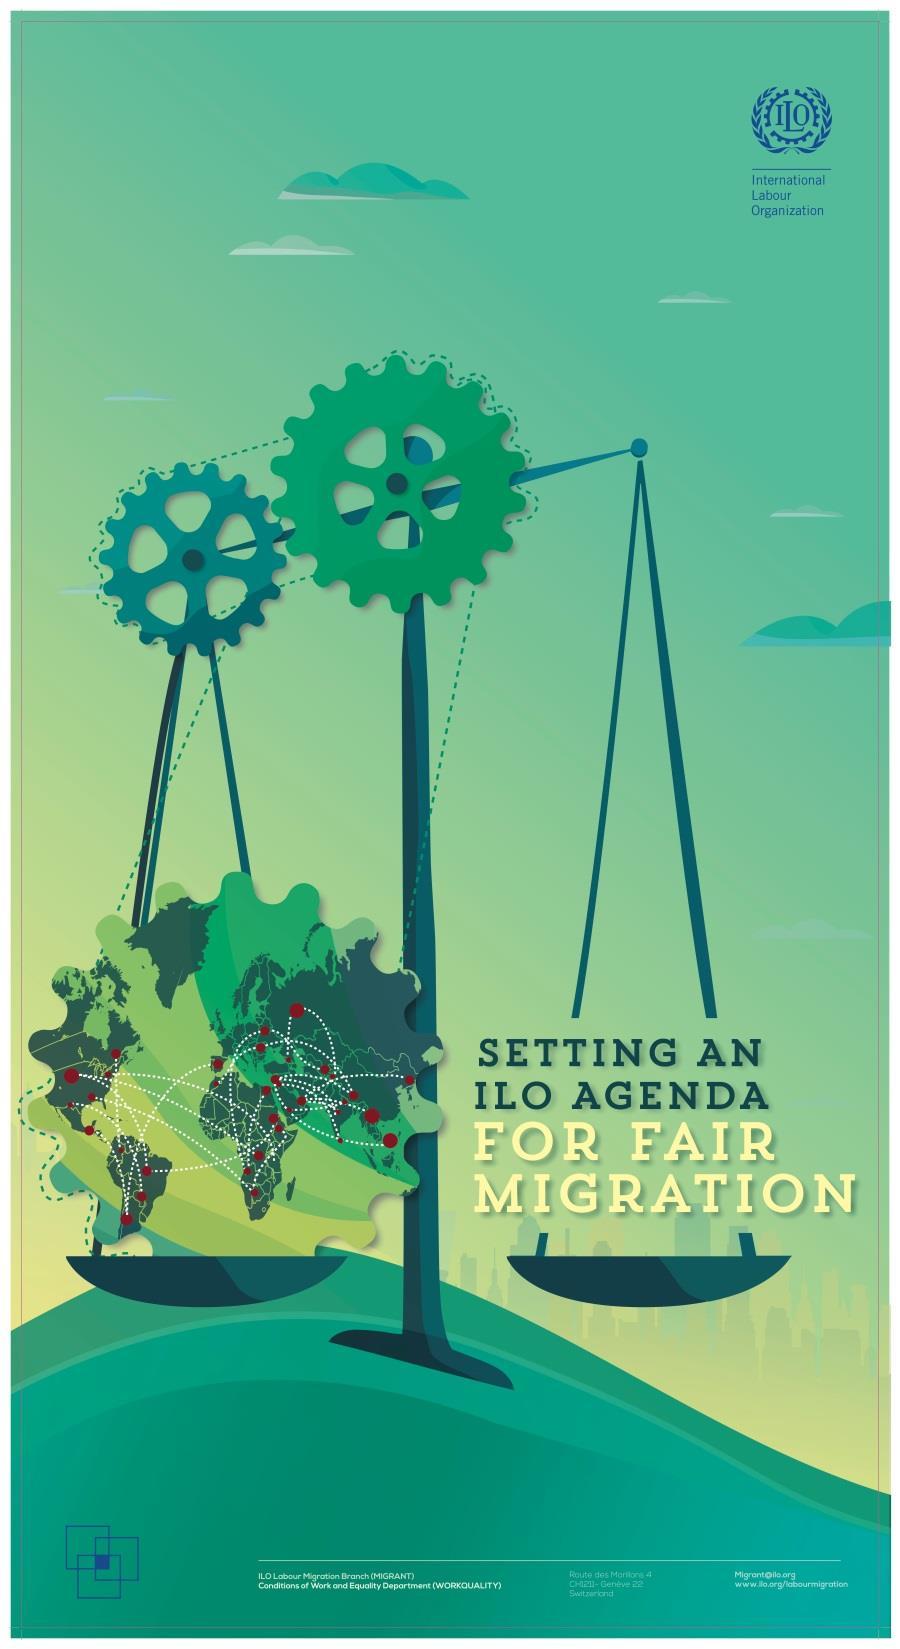 Abu Dhabi Dialogue 26-27 November 2014 An ILO Agenda for Fair Migration, including Fair